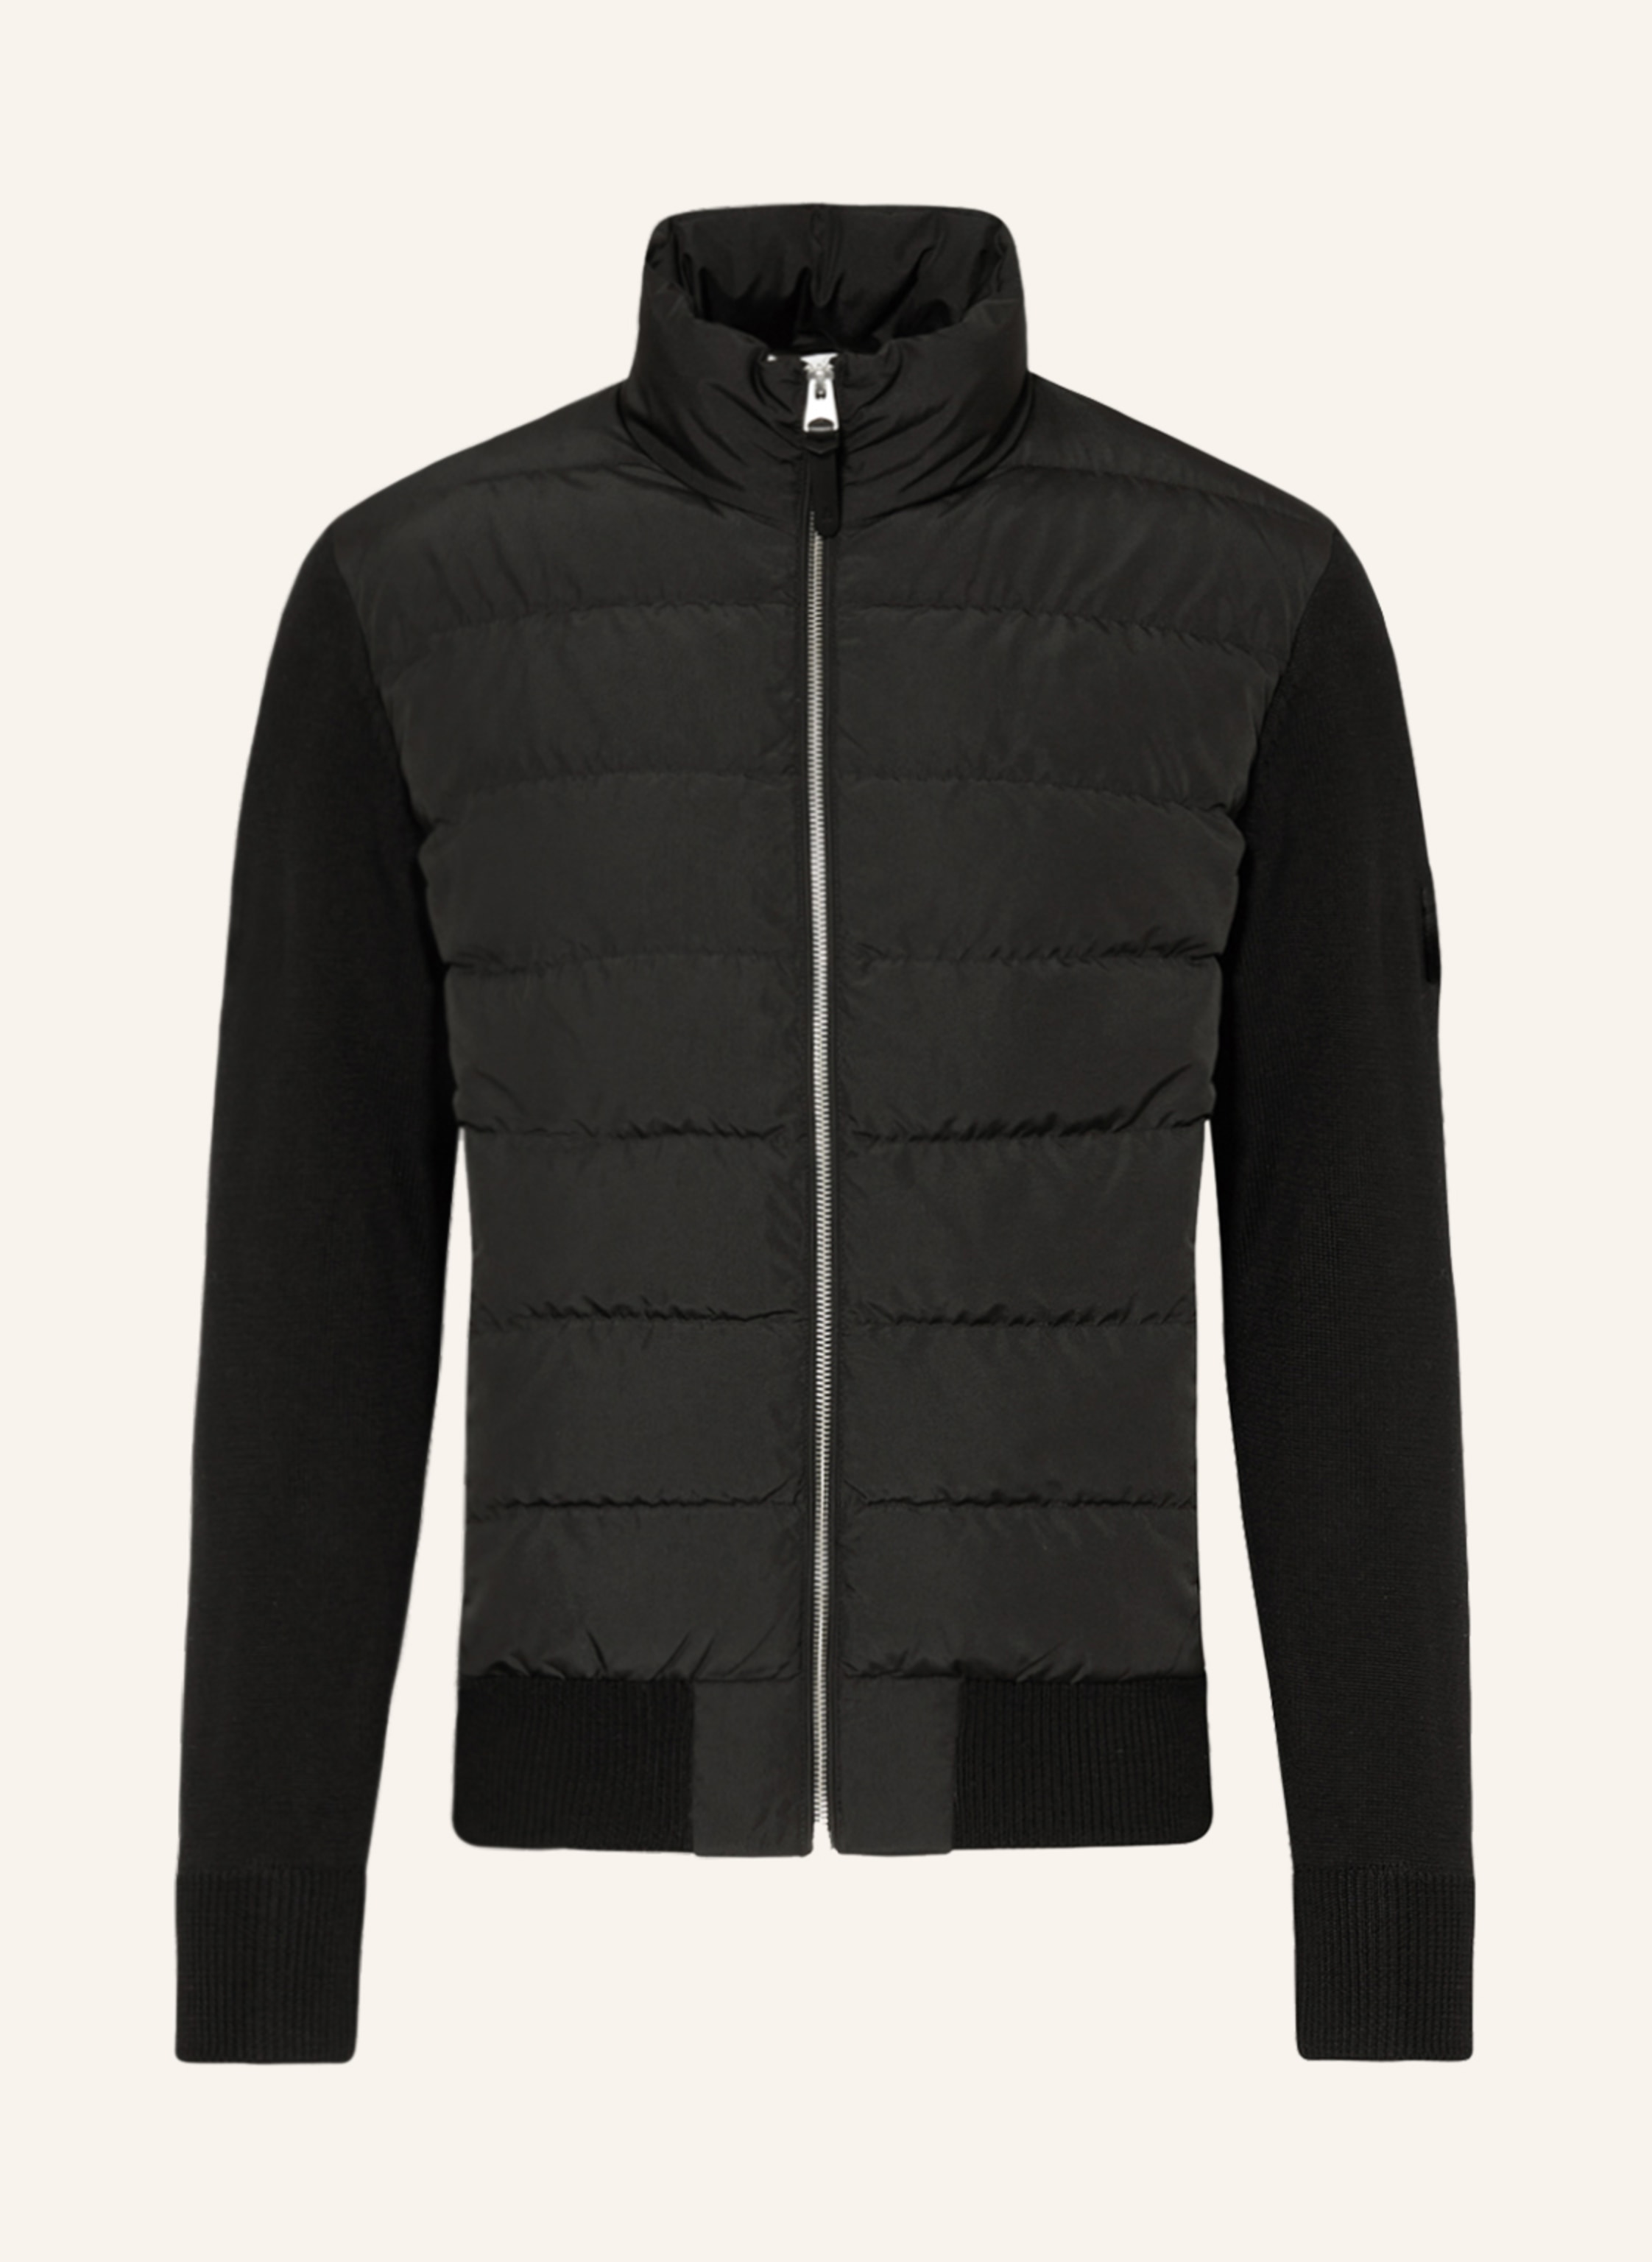 Mackage Down jacket HANEY in mixed materials in black | Breuninger